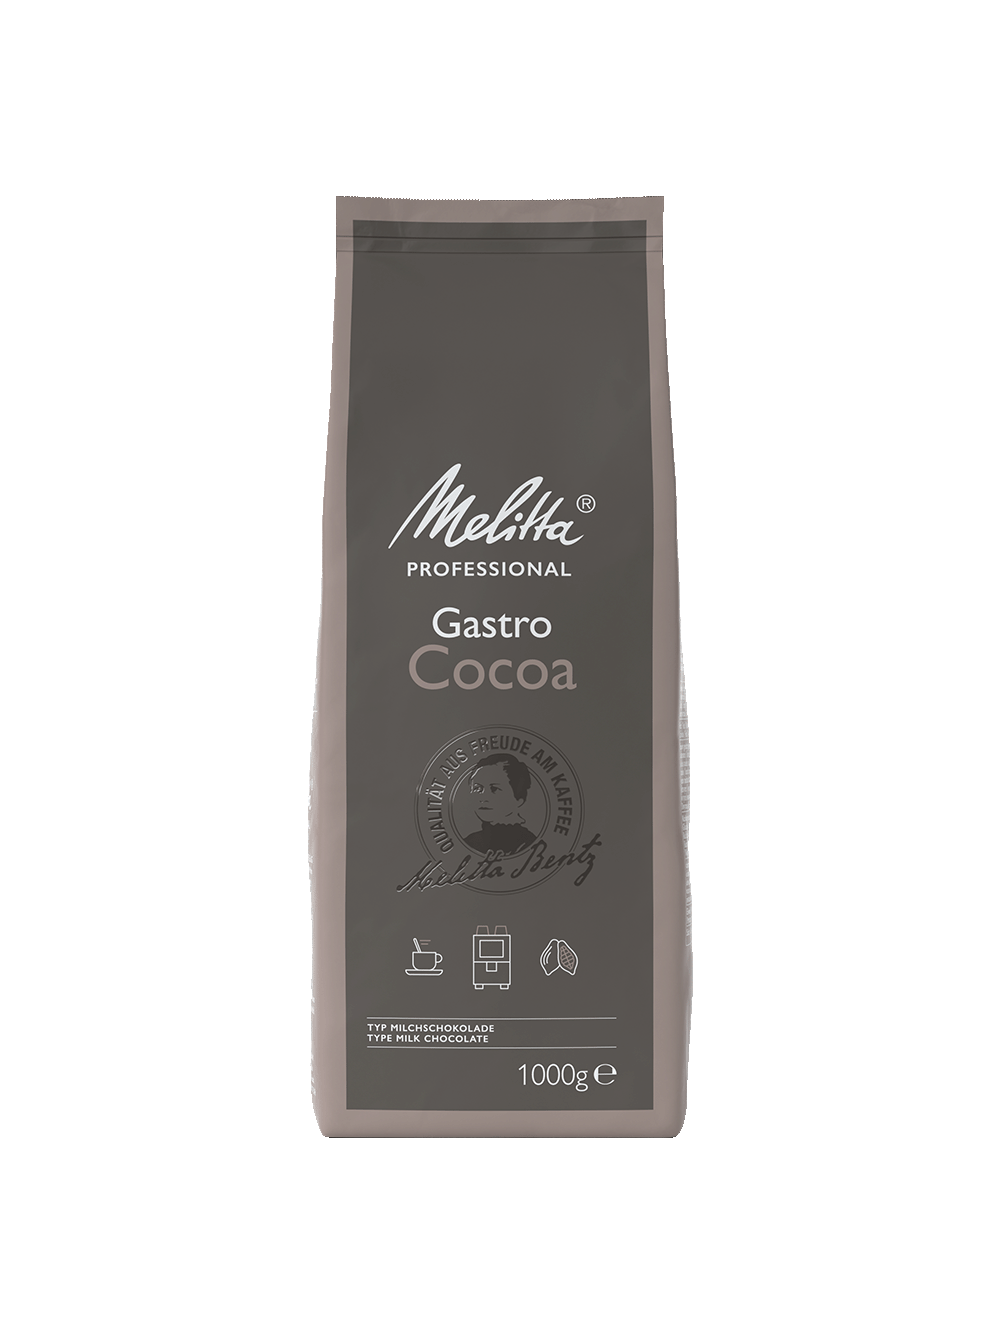 Melitta® Gastronomy Cacao 1000g